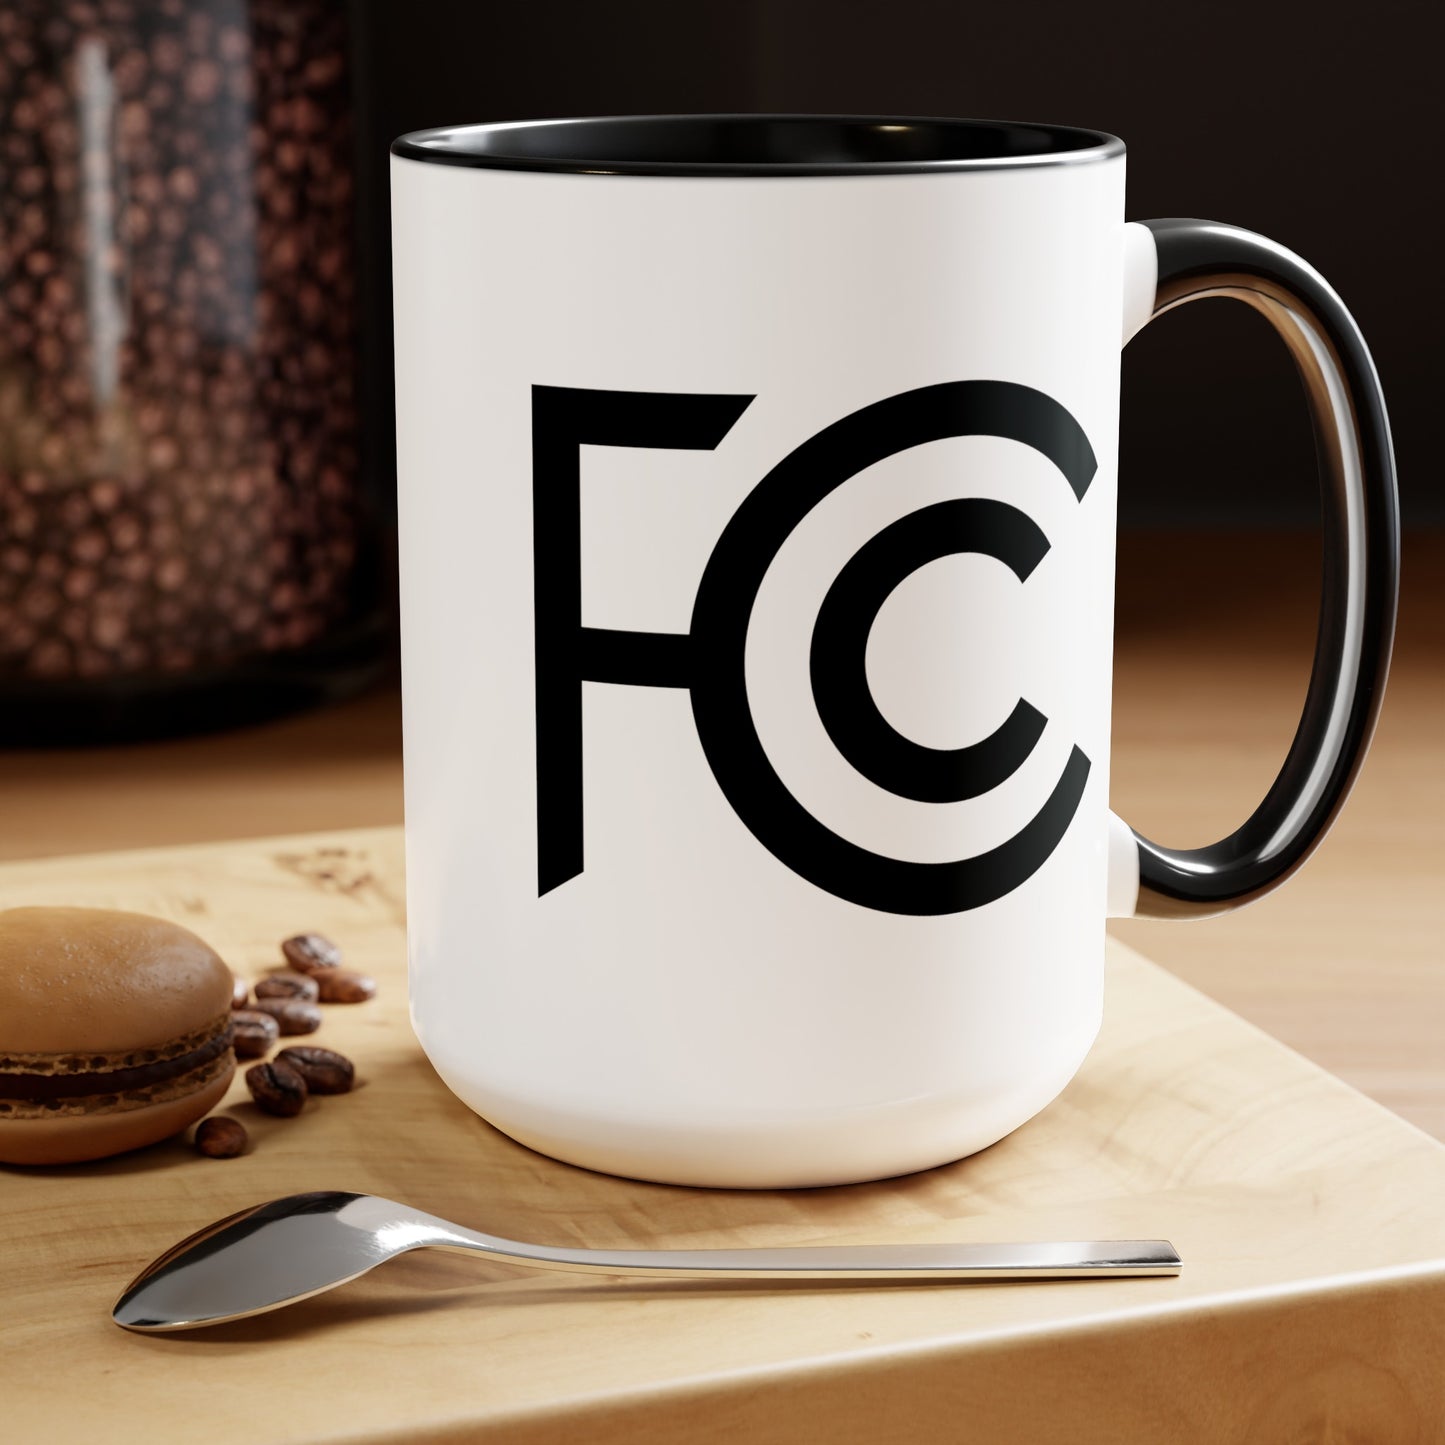 FCC Seal Coffee Mug - Double Sided Black Accent White Ceramic 15oz by TheGlassyLass.com